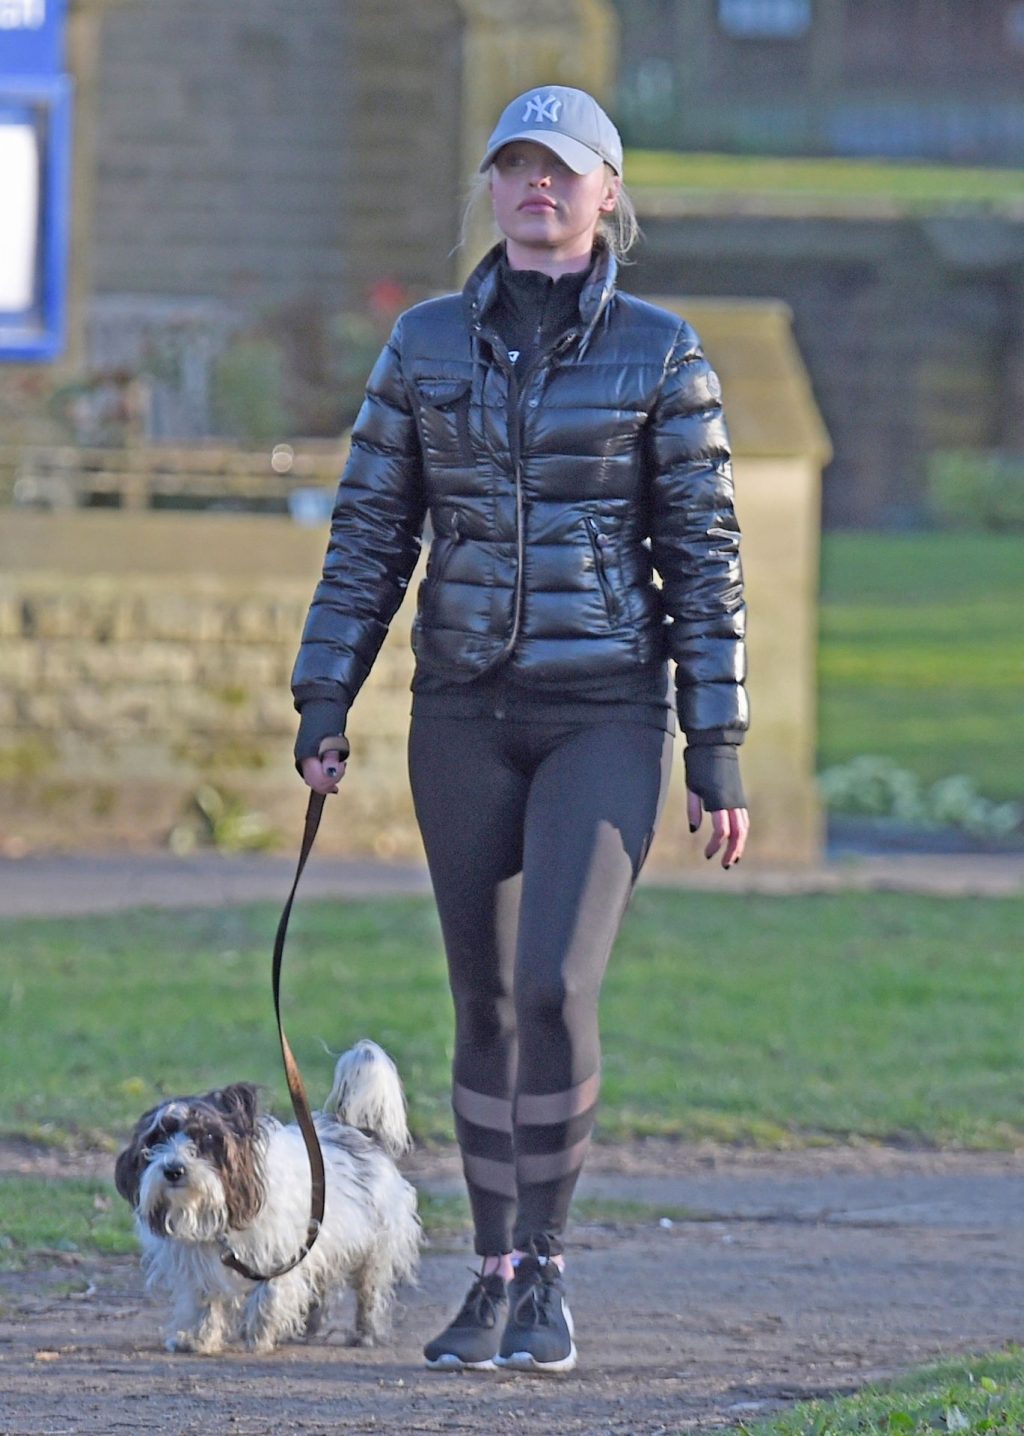 Jorgie Porter Was Seen Going for an Early Morning Jog in Manchester (22 Photos)